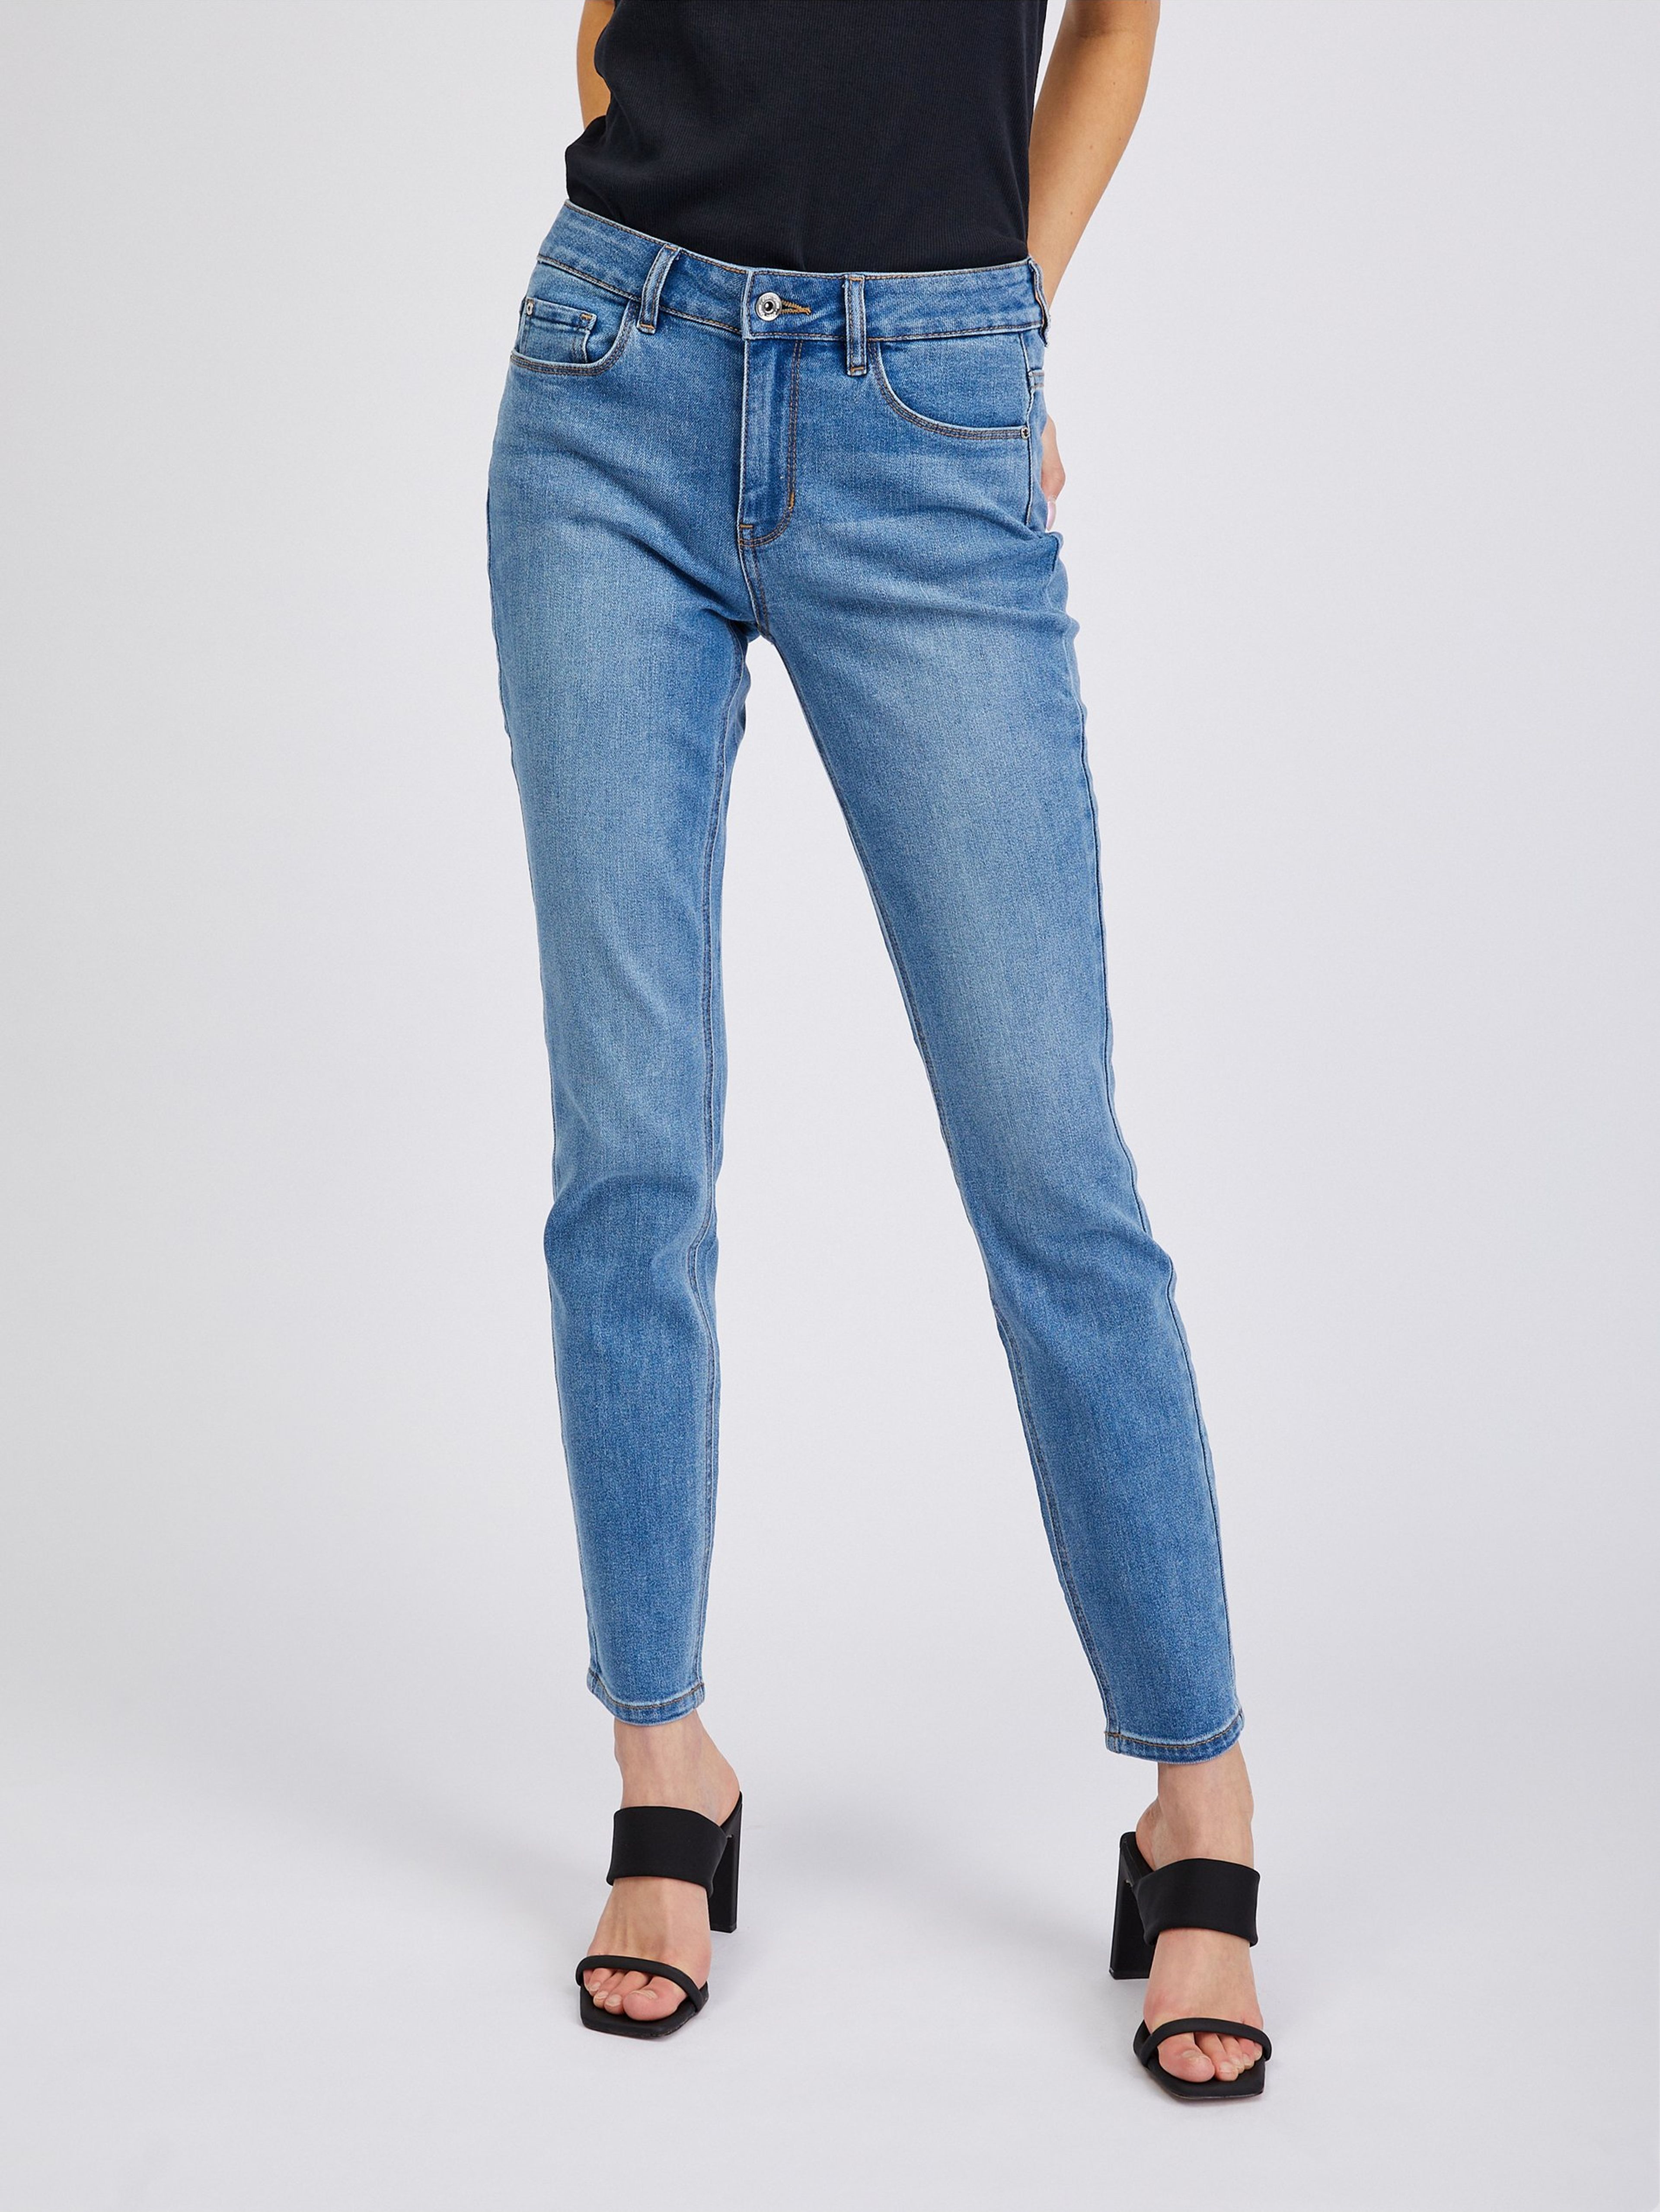 Jasnoniebieskie jeansy damskie slim fit ORSAY